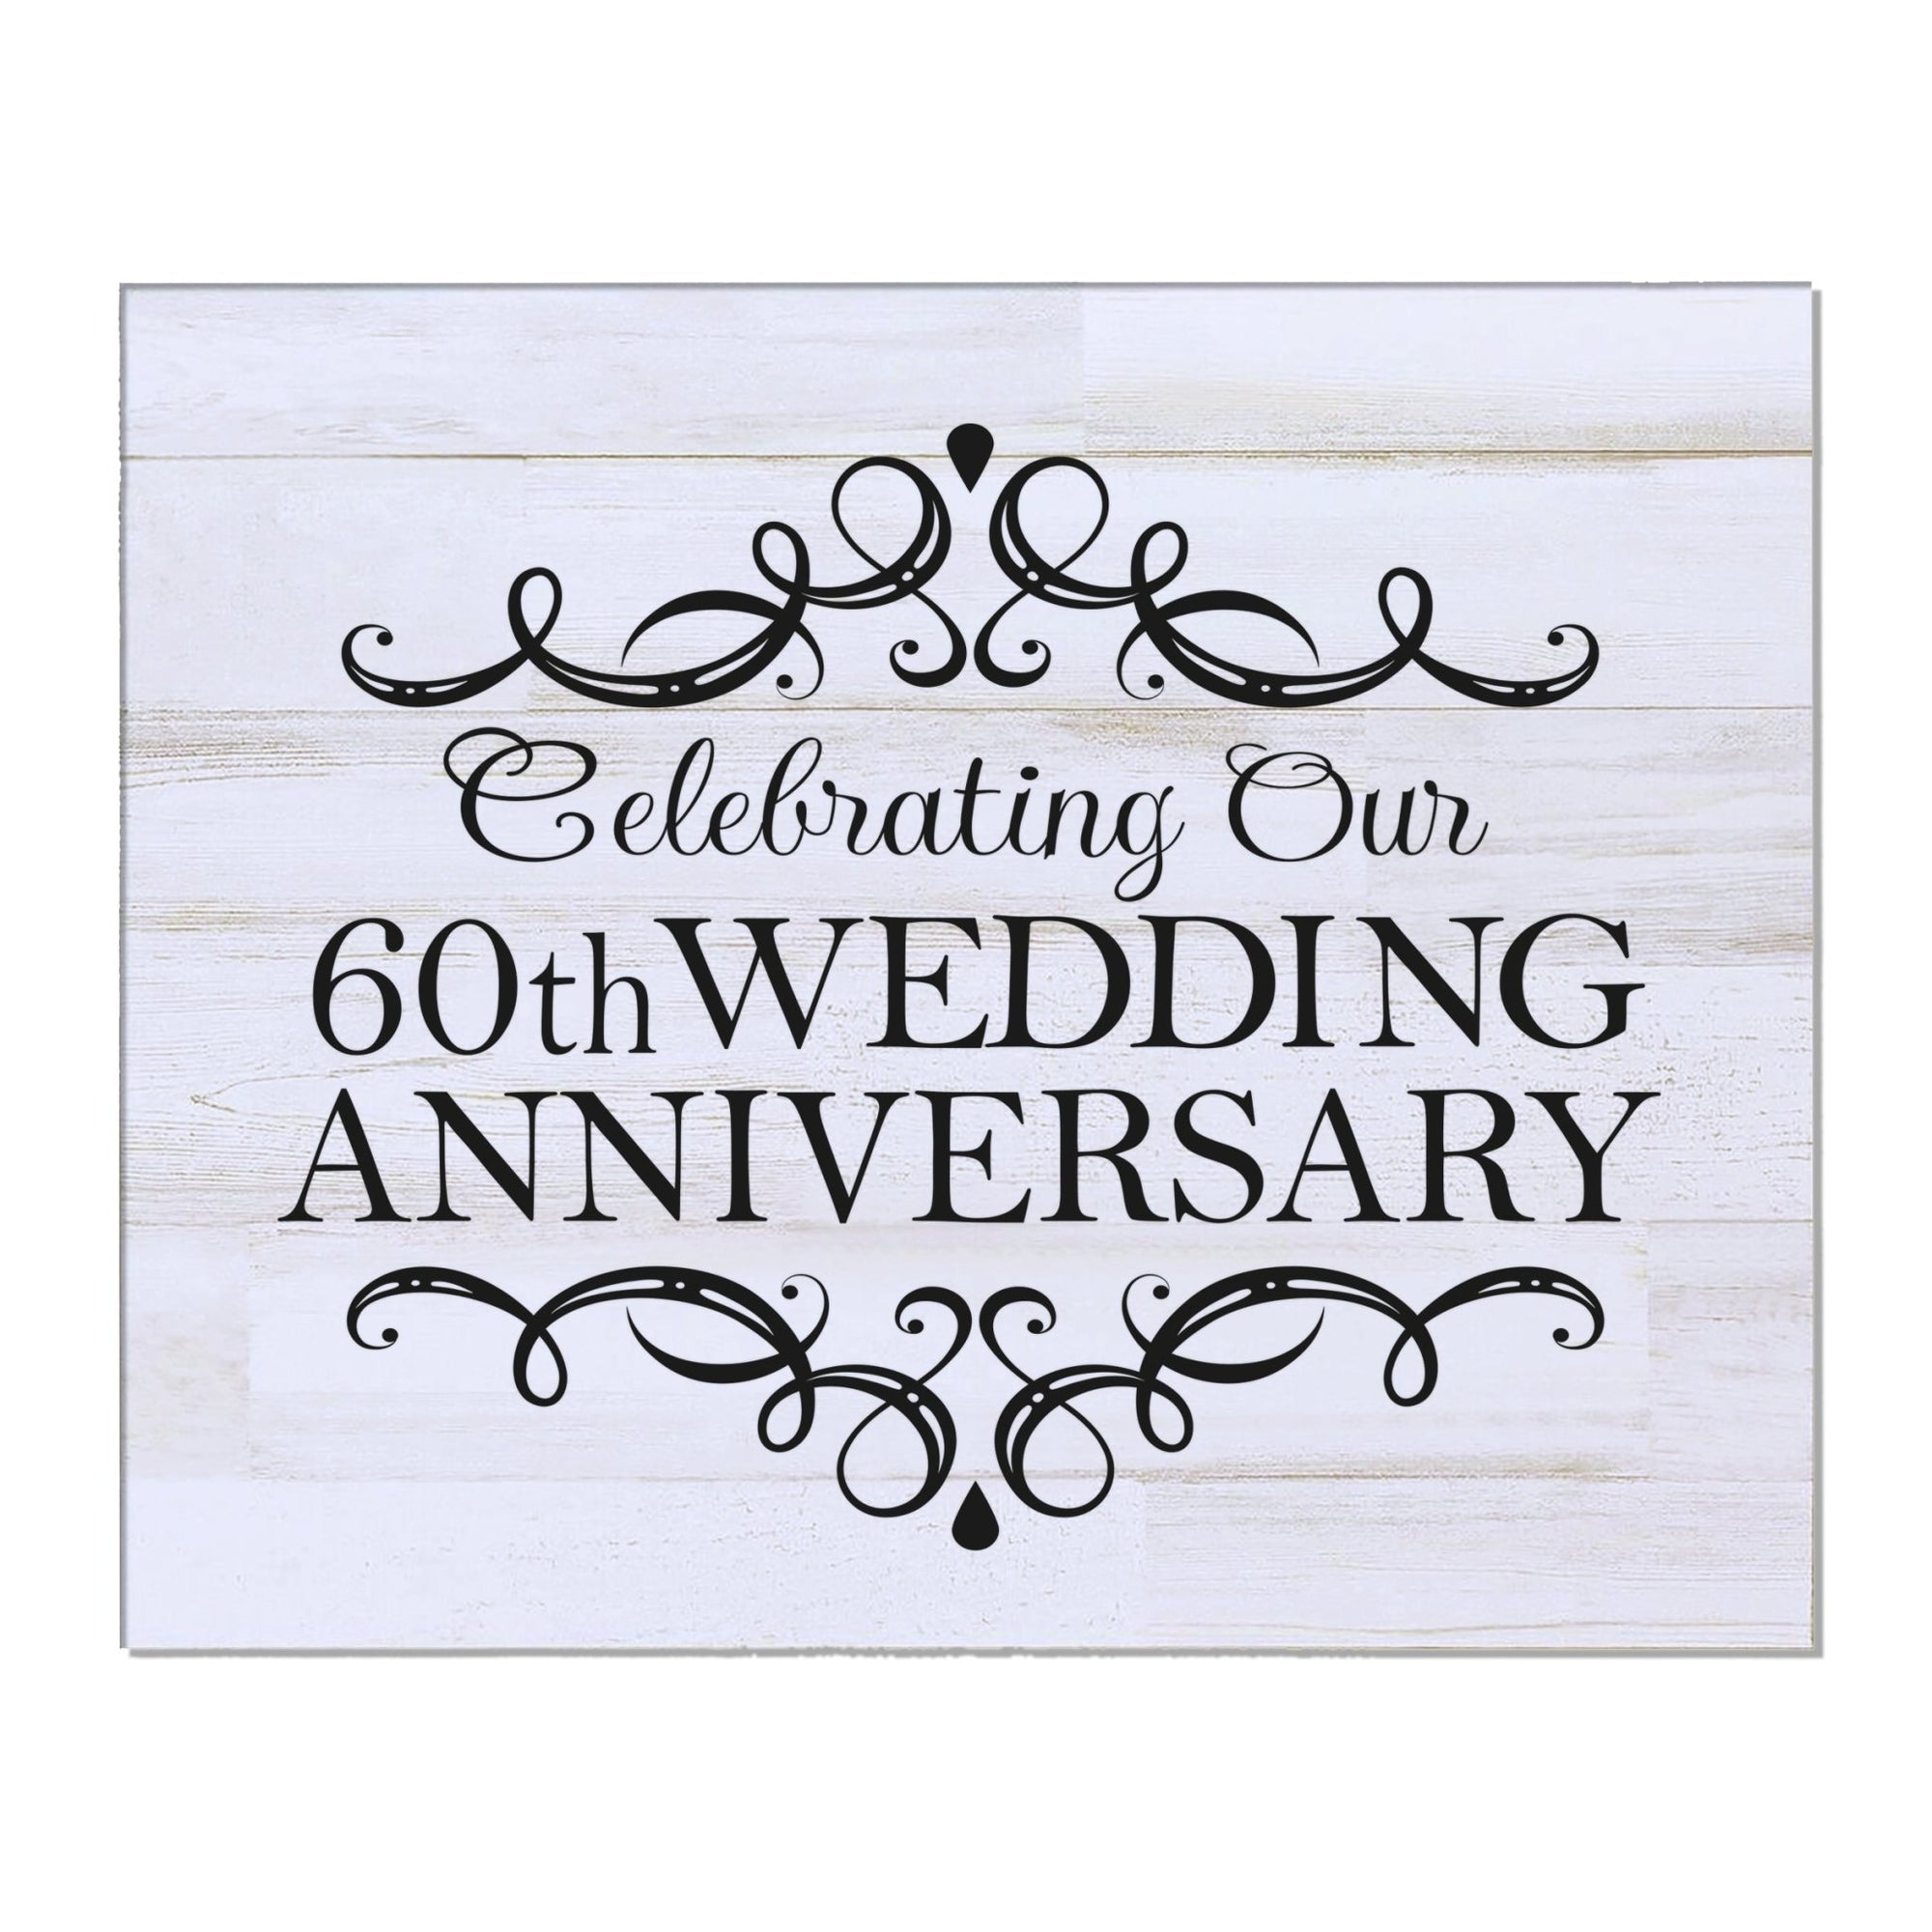 60th Wedding Anniversary Wall Plaque - Celebrating - LifeSong Milestones